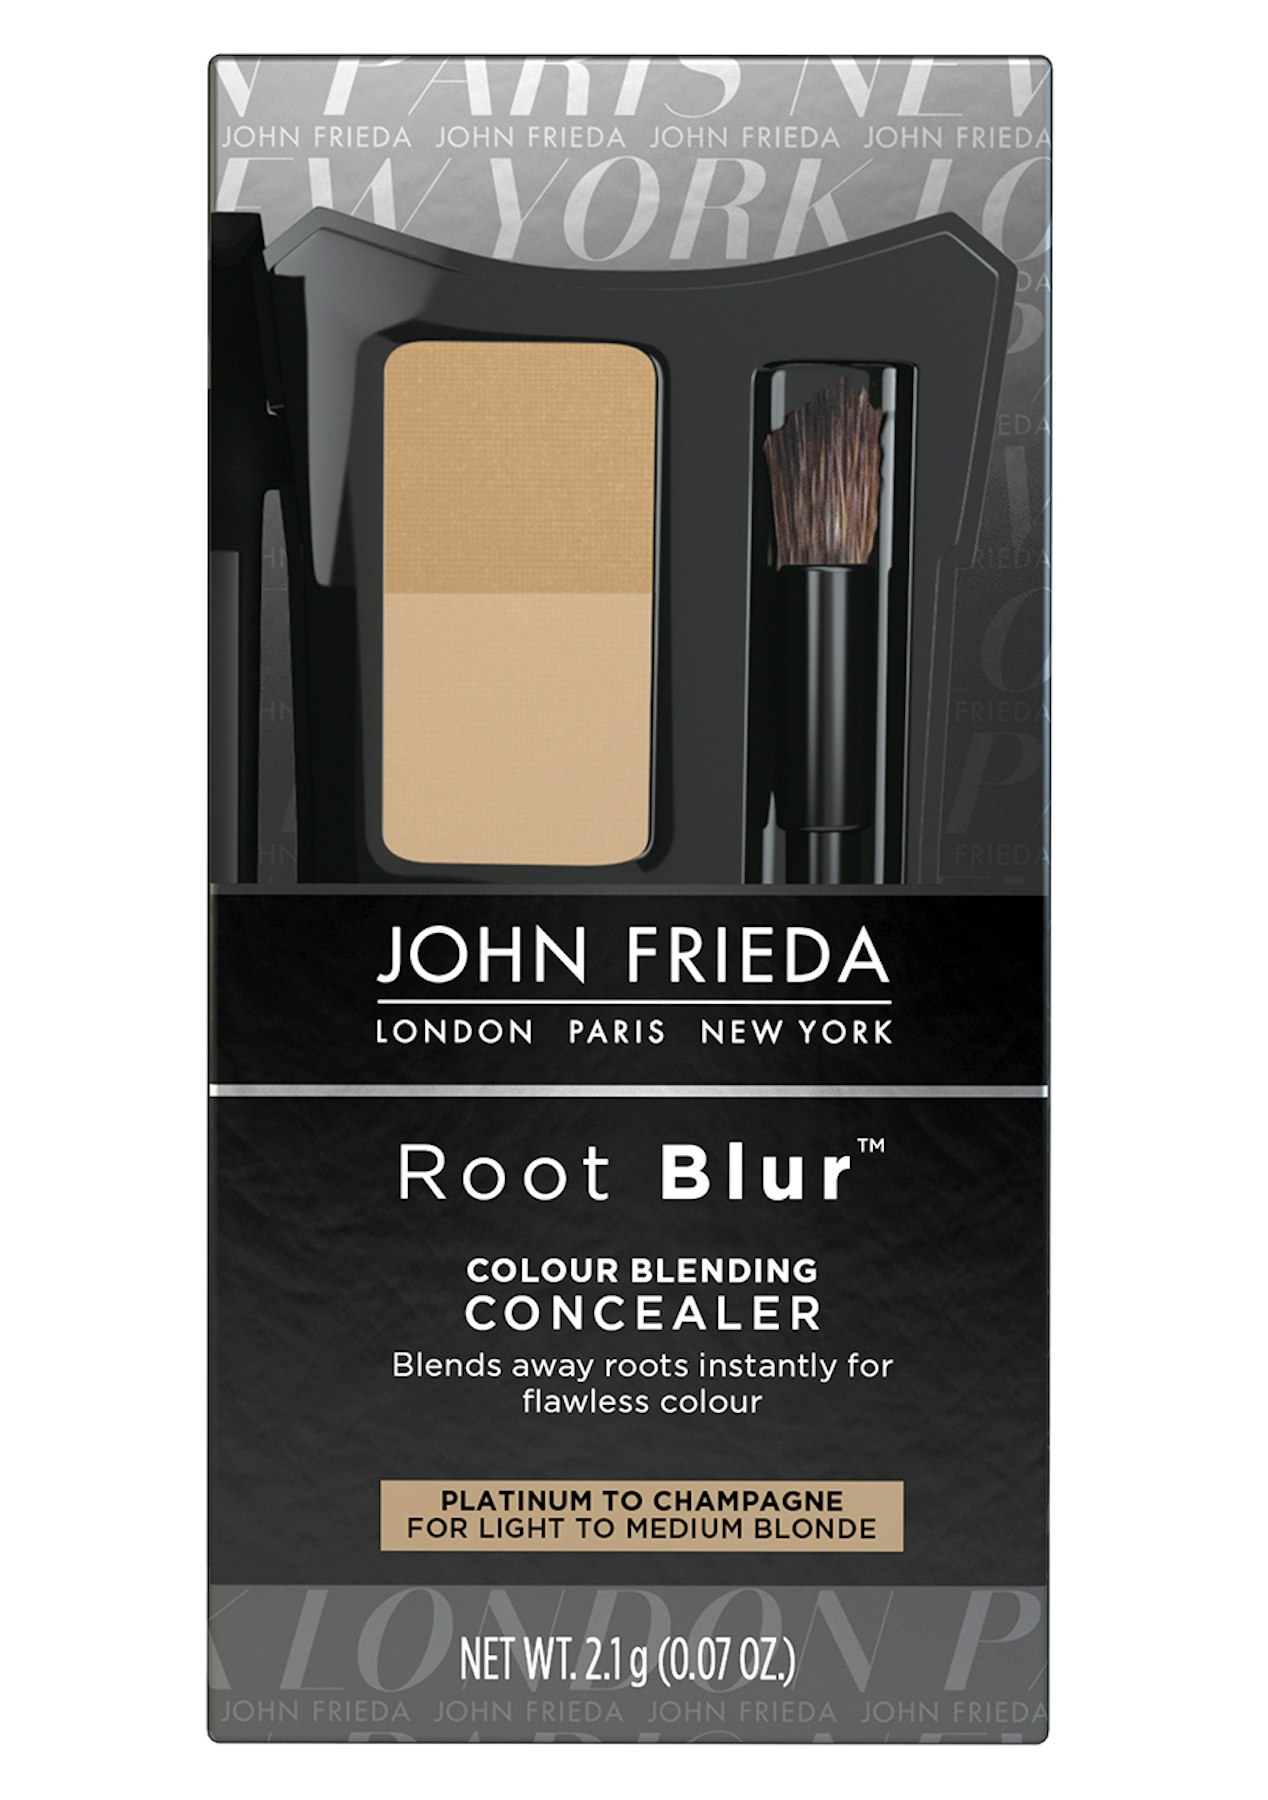 John Frieda Root Blur Blonde Platinum To Champagne Light Med